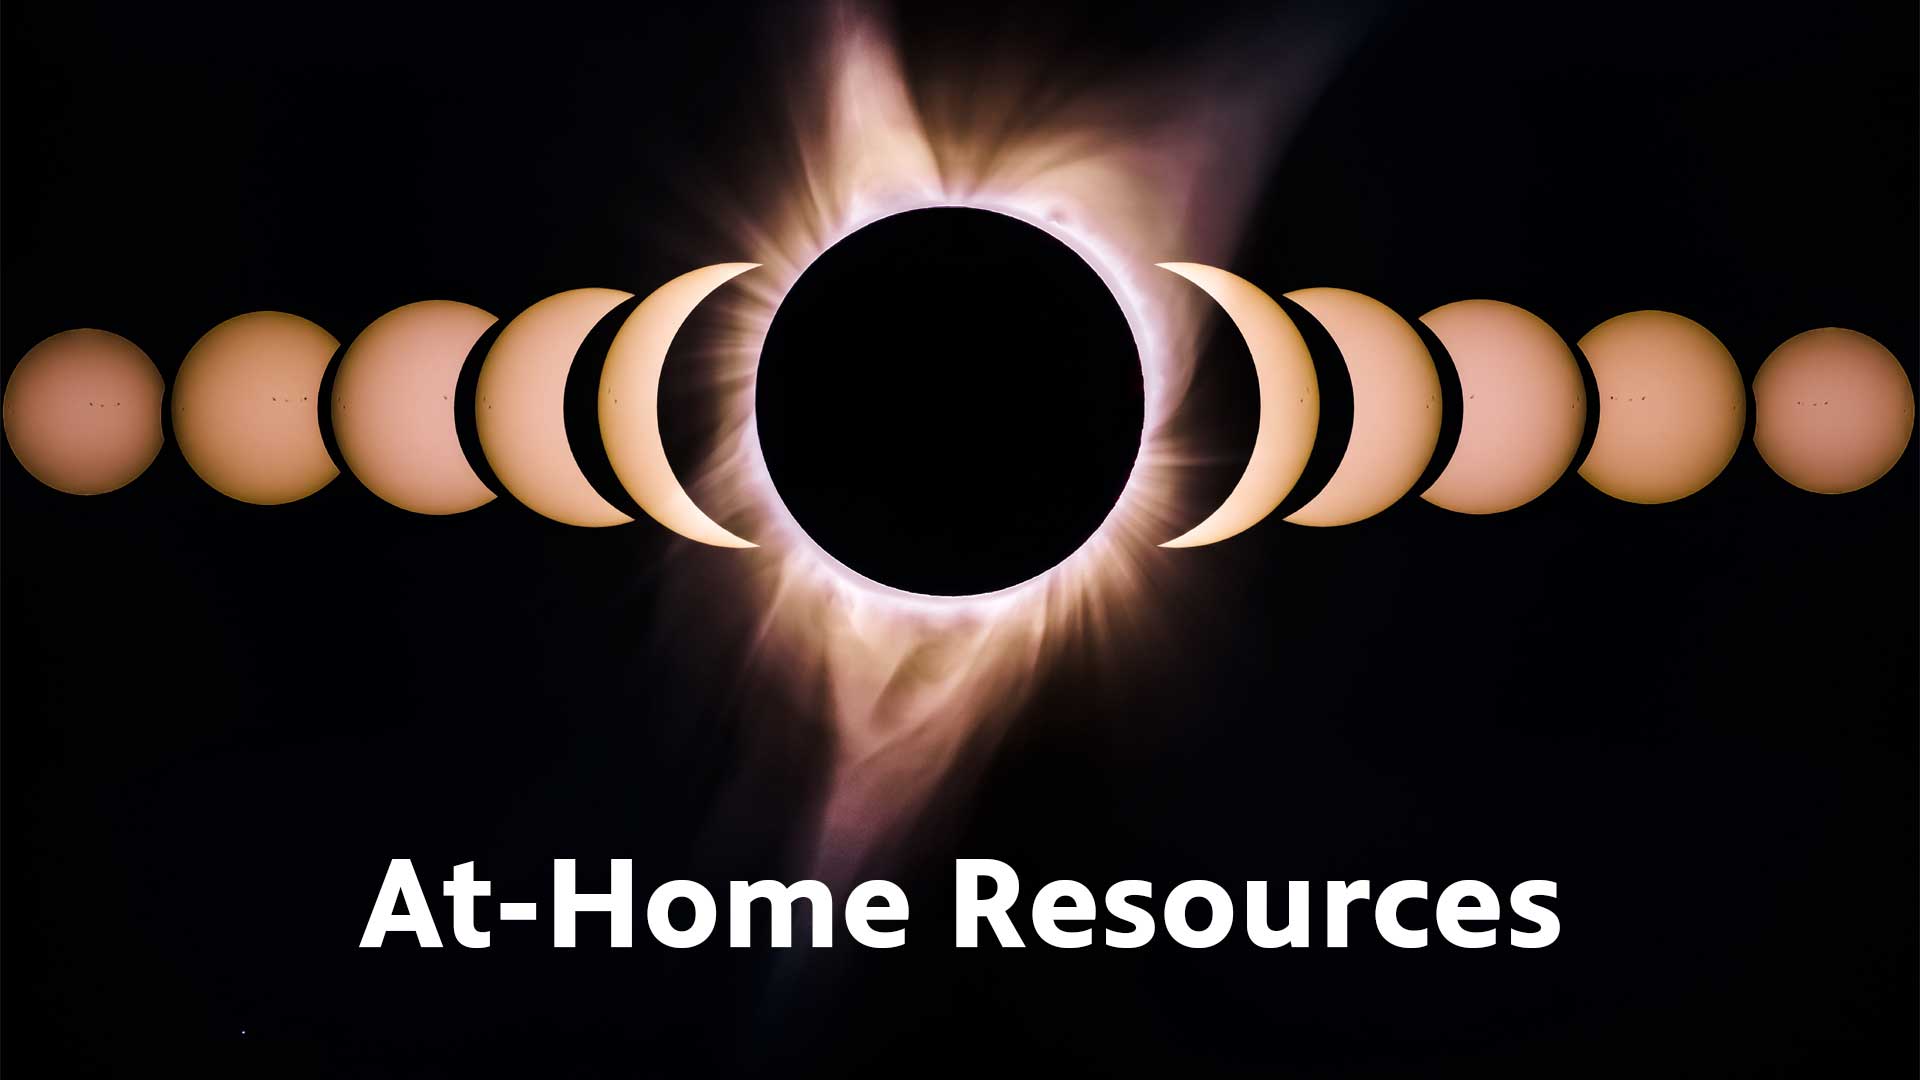 Eclipse Resources